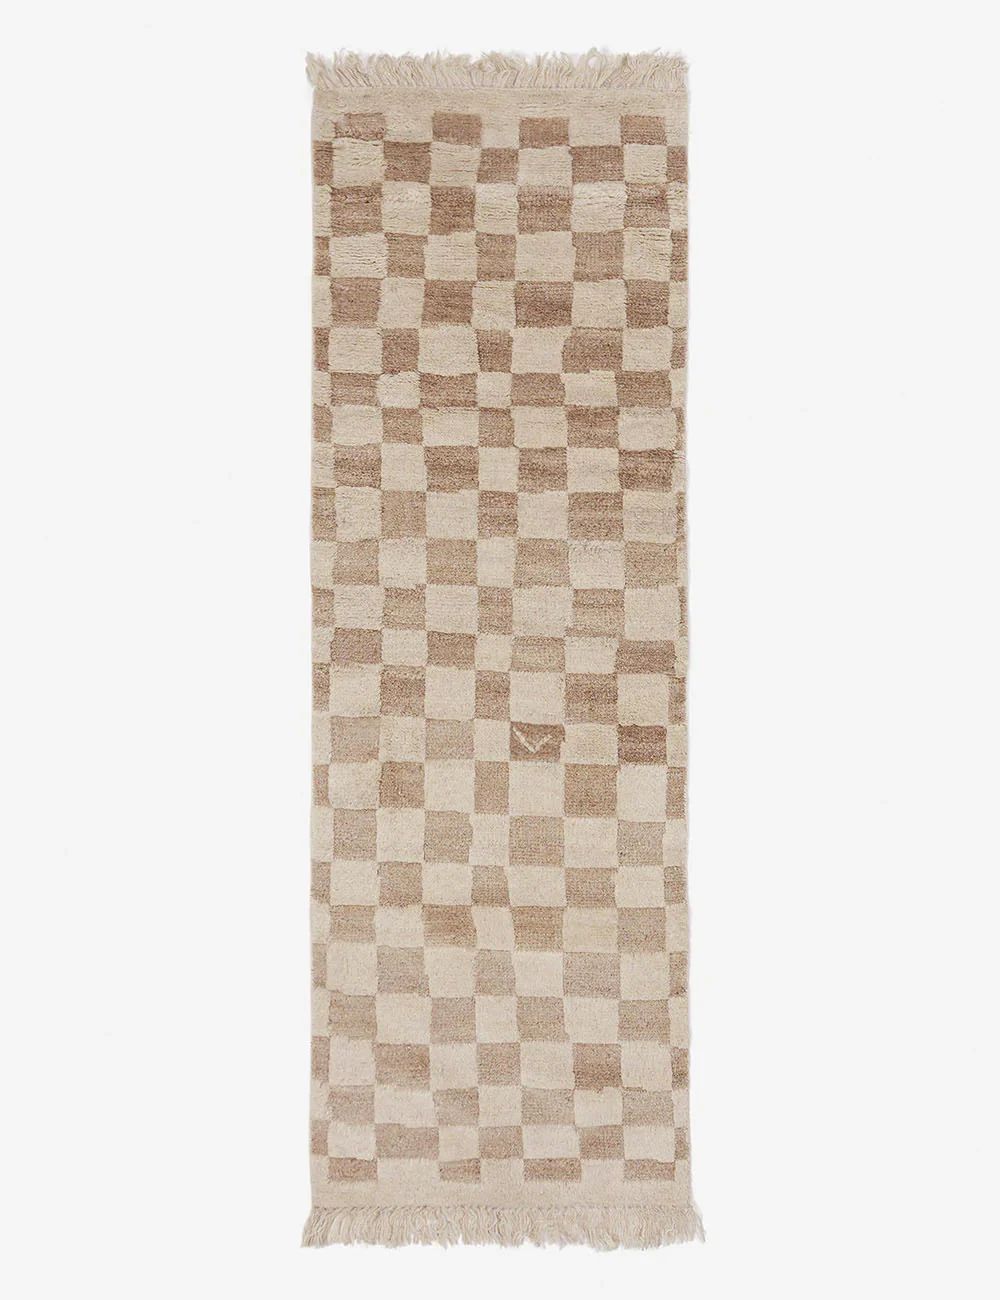 Irregular Checkerboard Hand-Knotted Wool Rug | Lulu and Georgia 